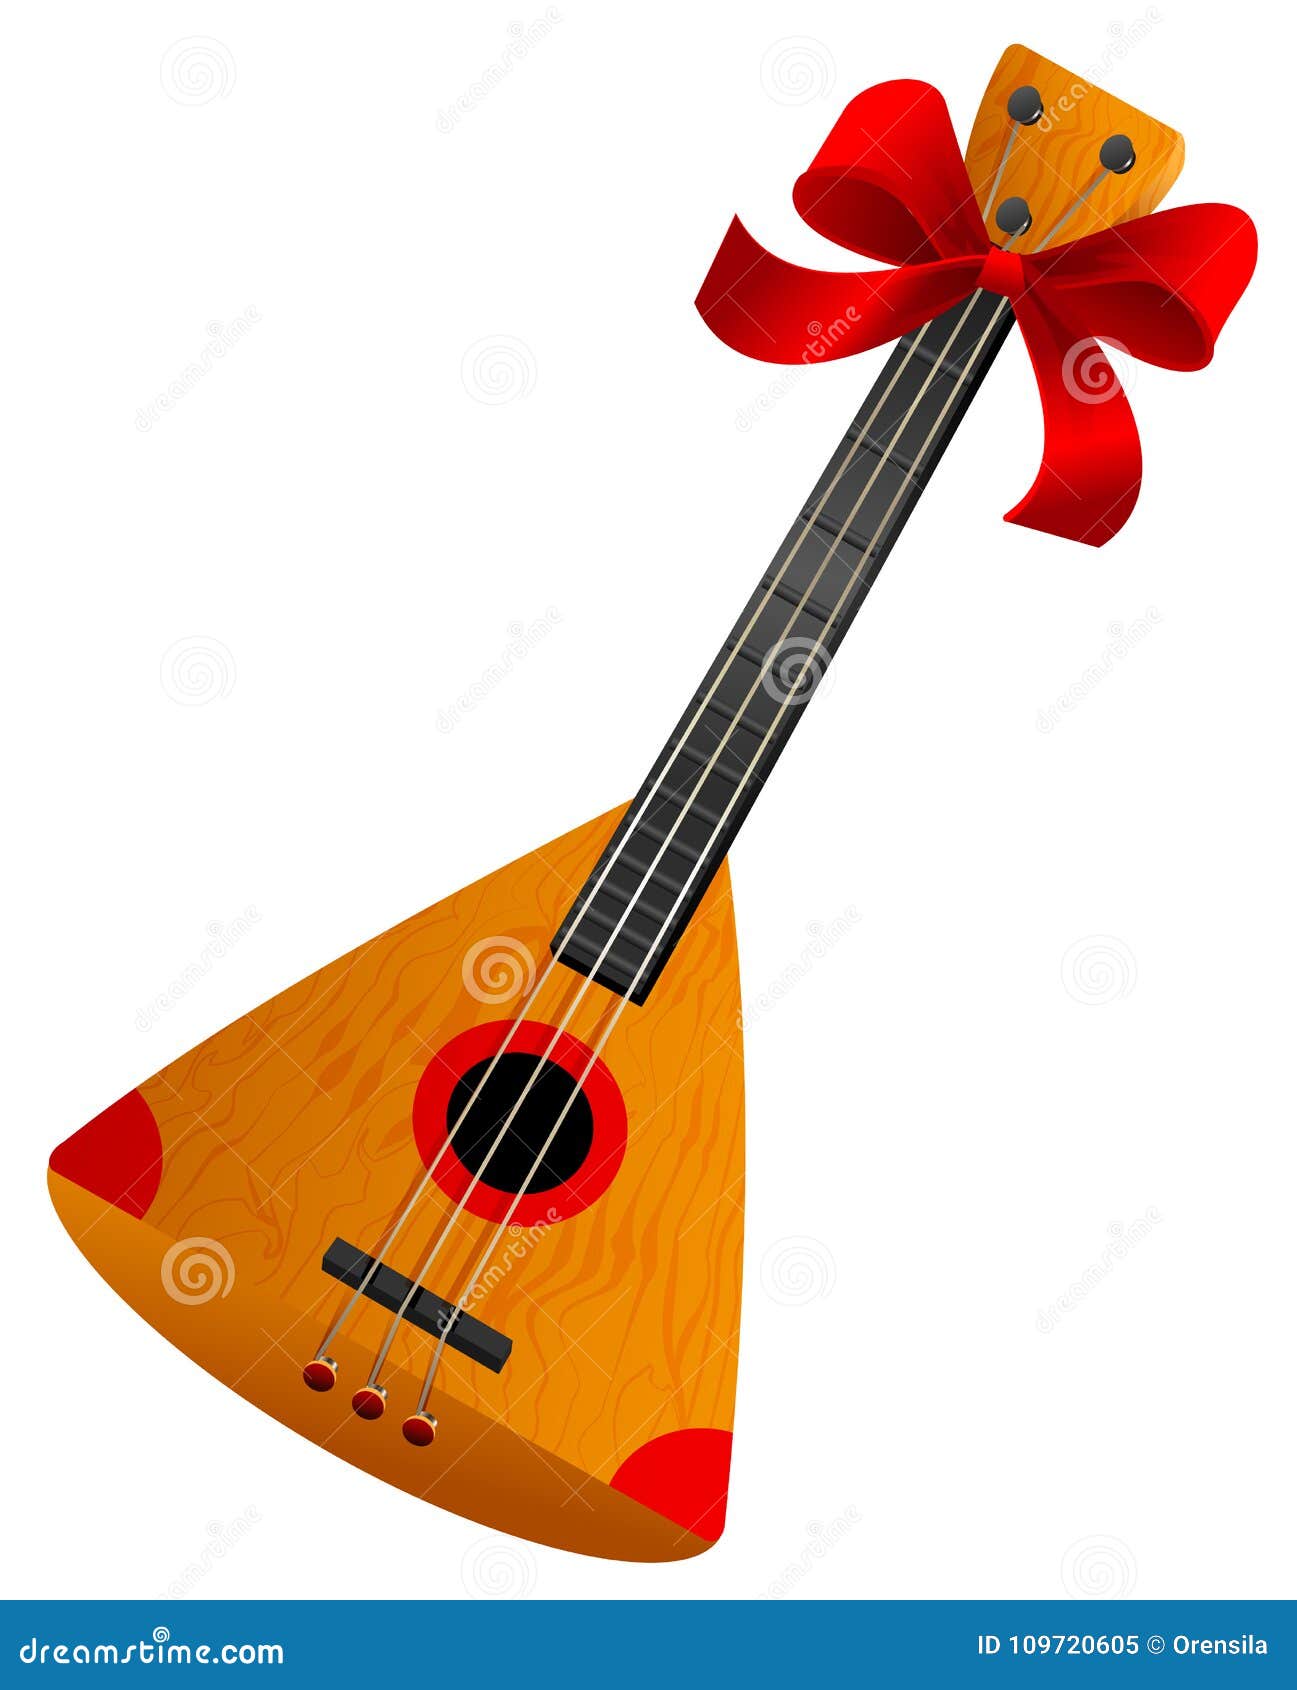 balalaika russian retro national traditional musical instrument. stringed musical instrument